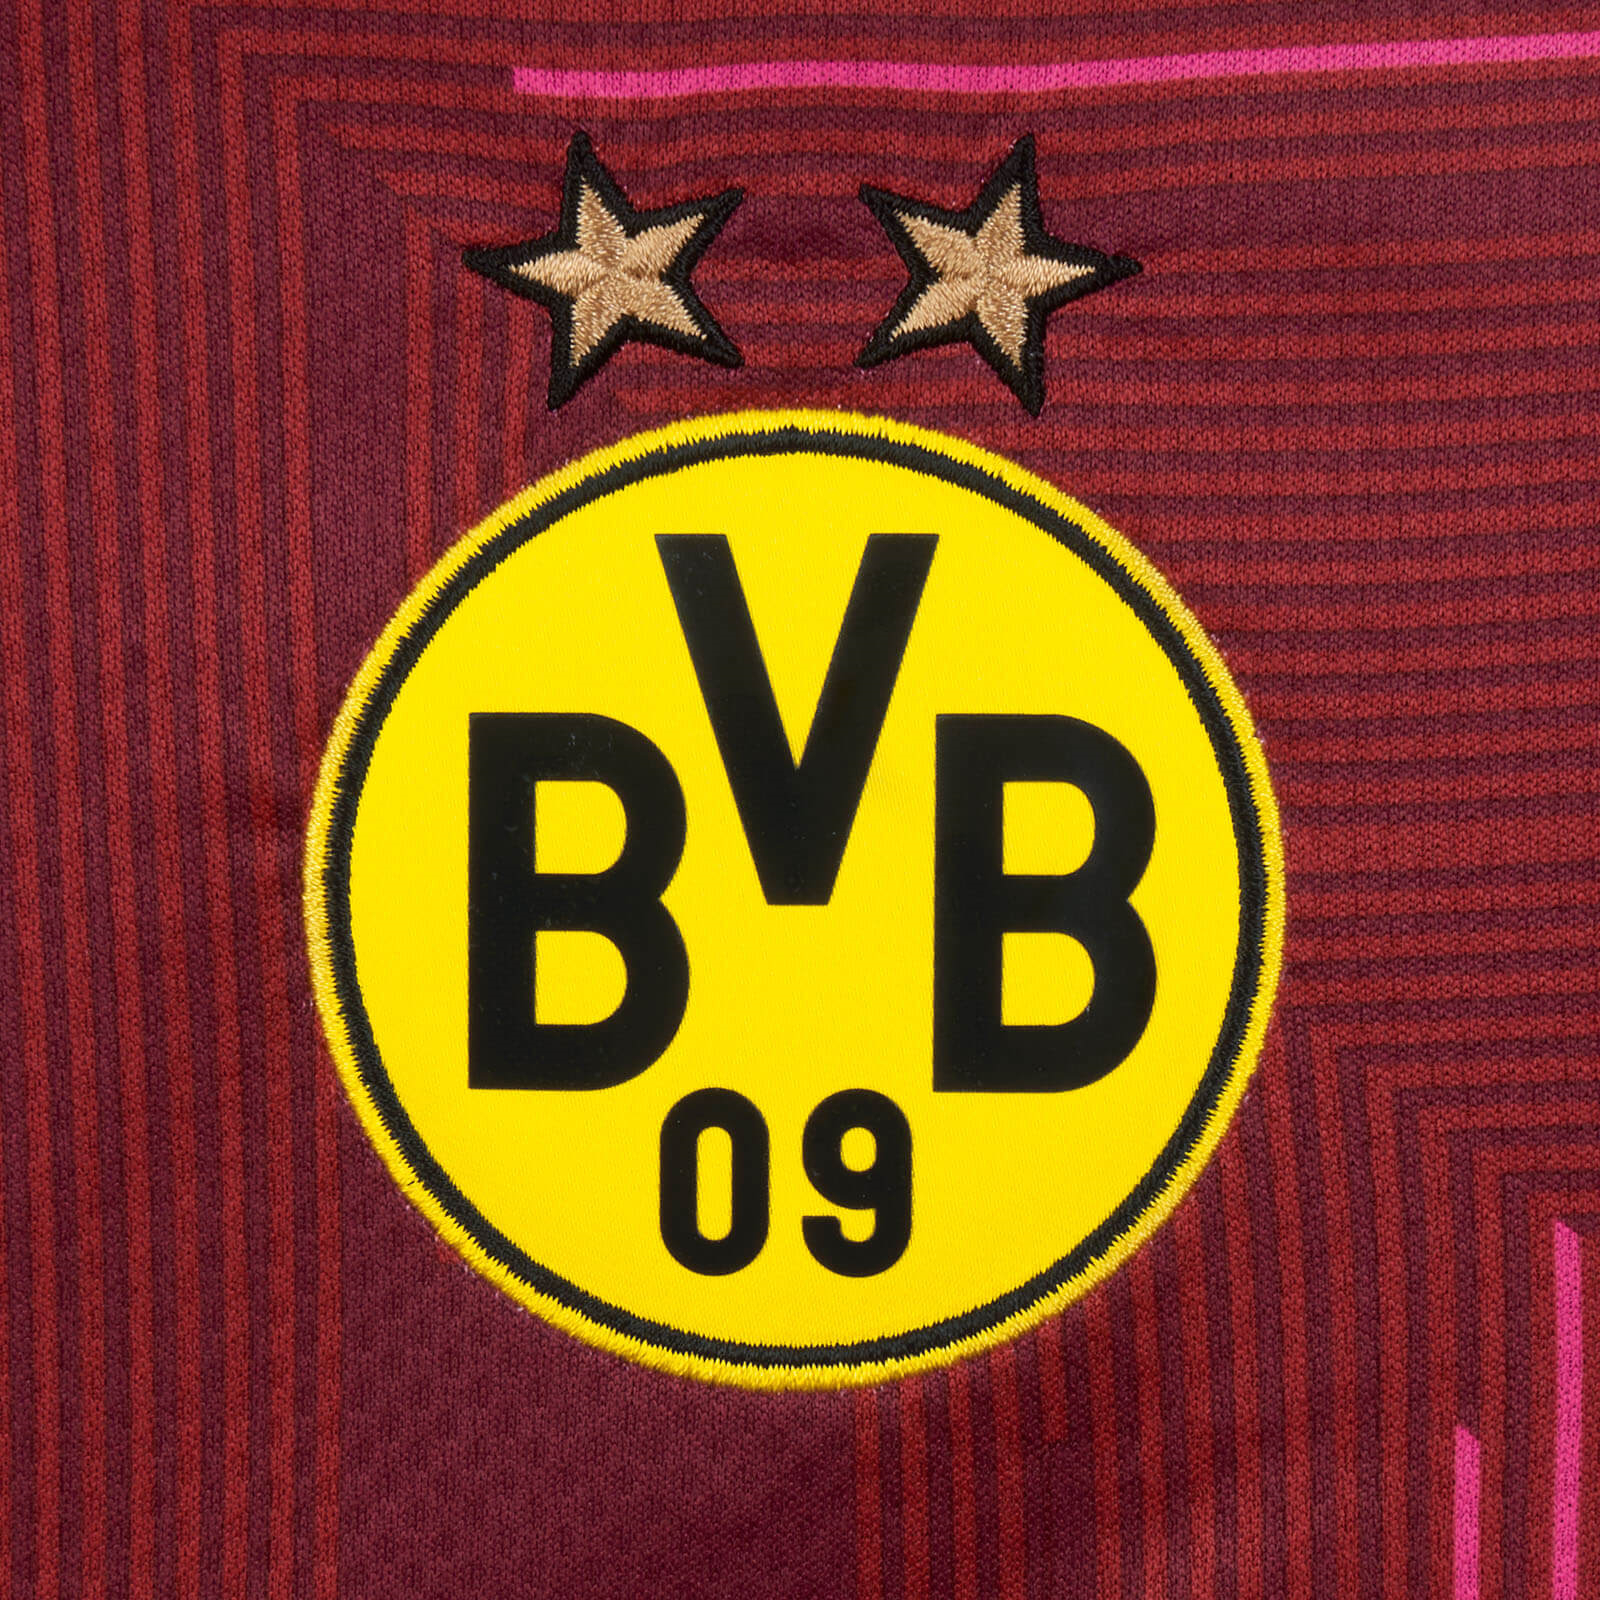 Borussia Dortmund Soccer Jersey Replica Goalkeeper Red Long Sleeve Mens 2021/22